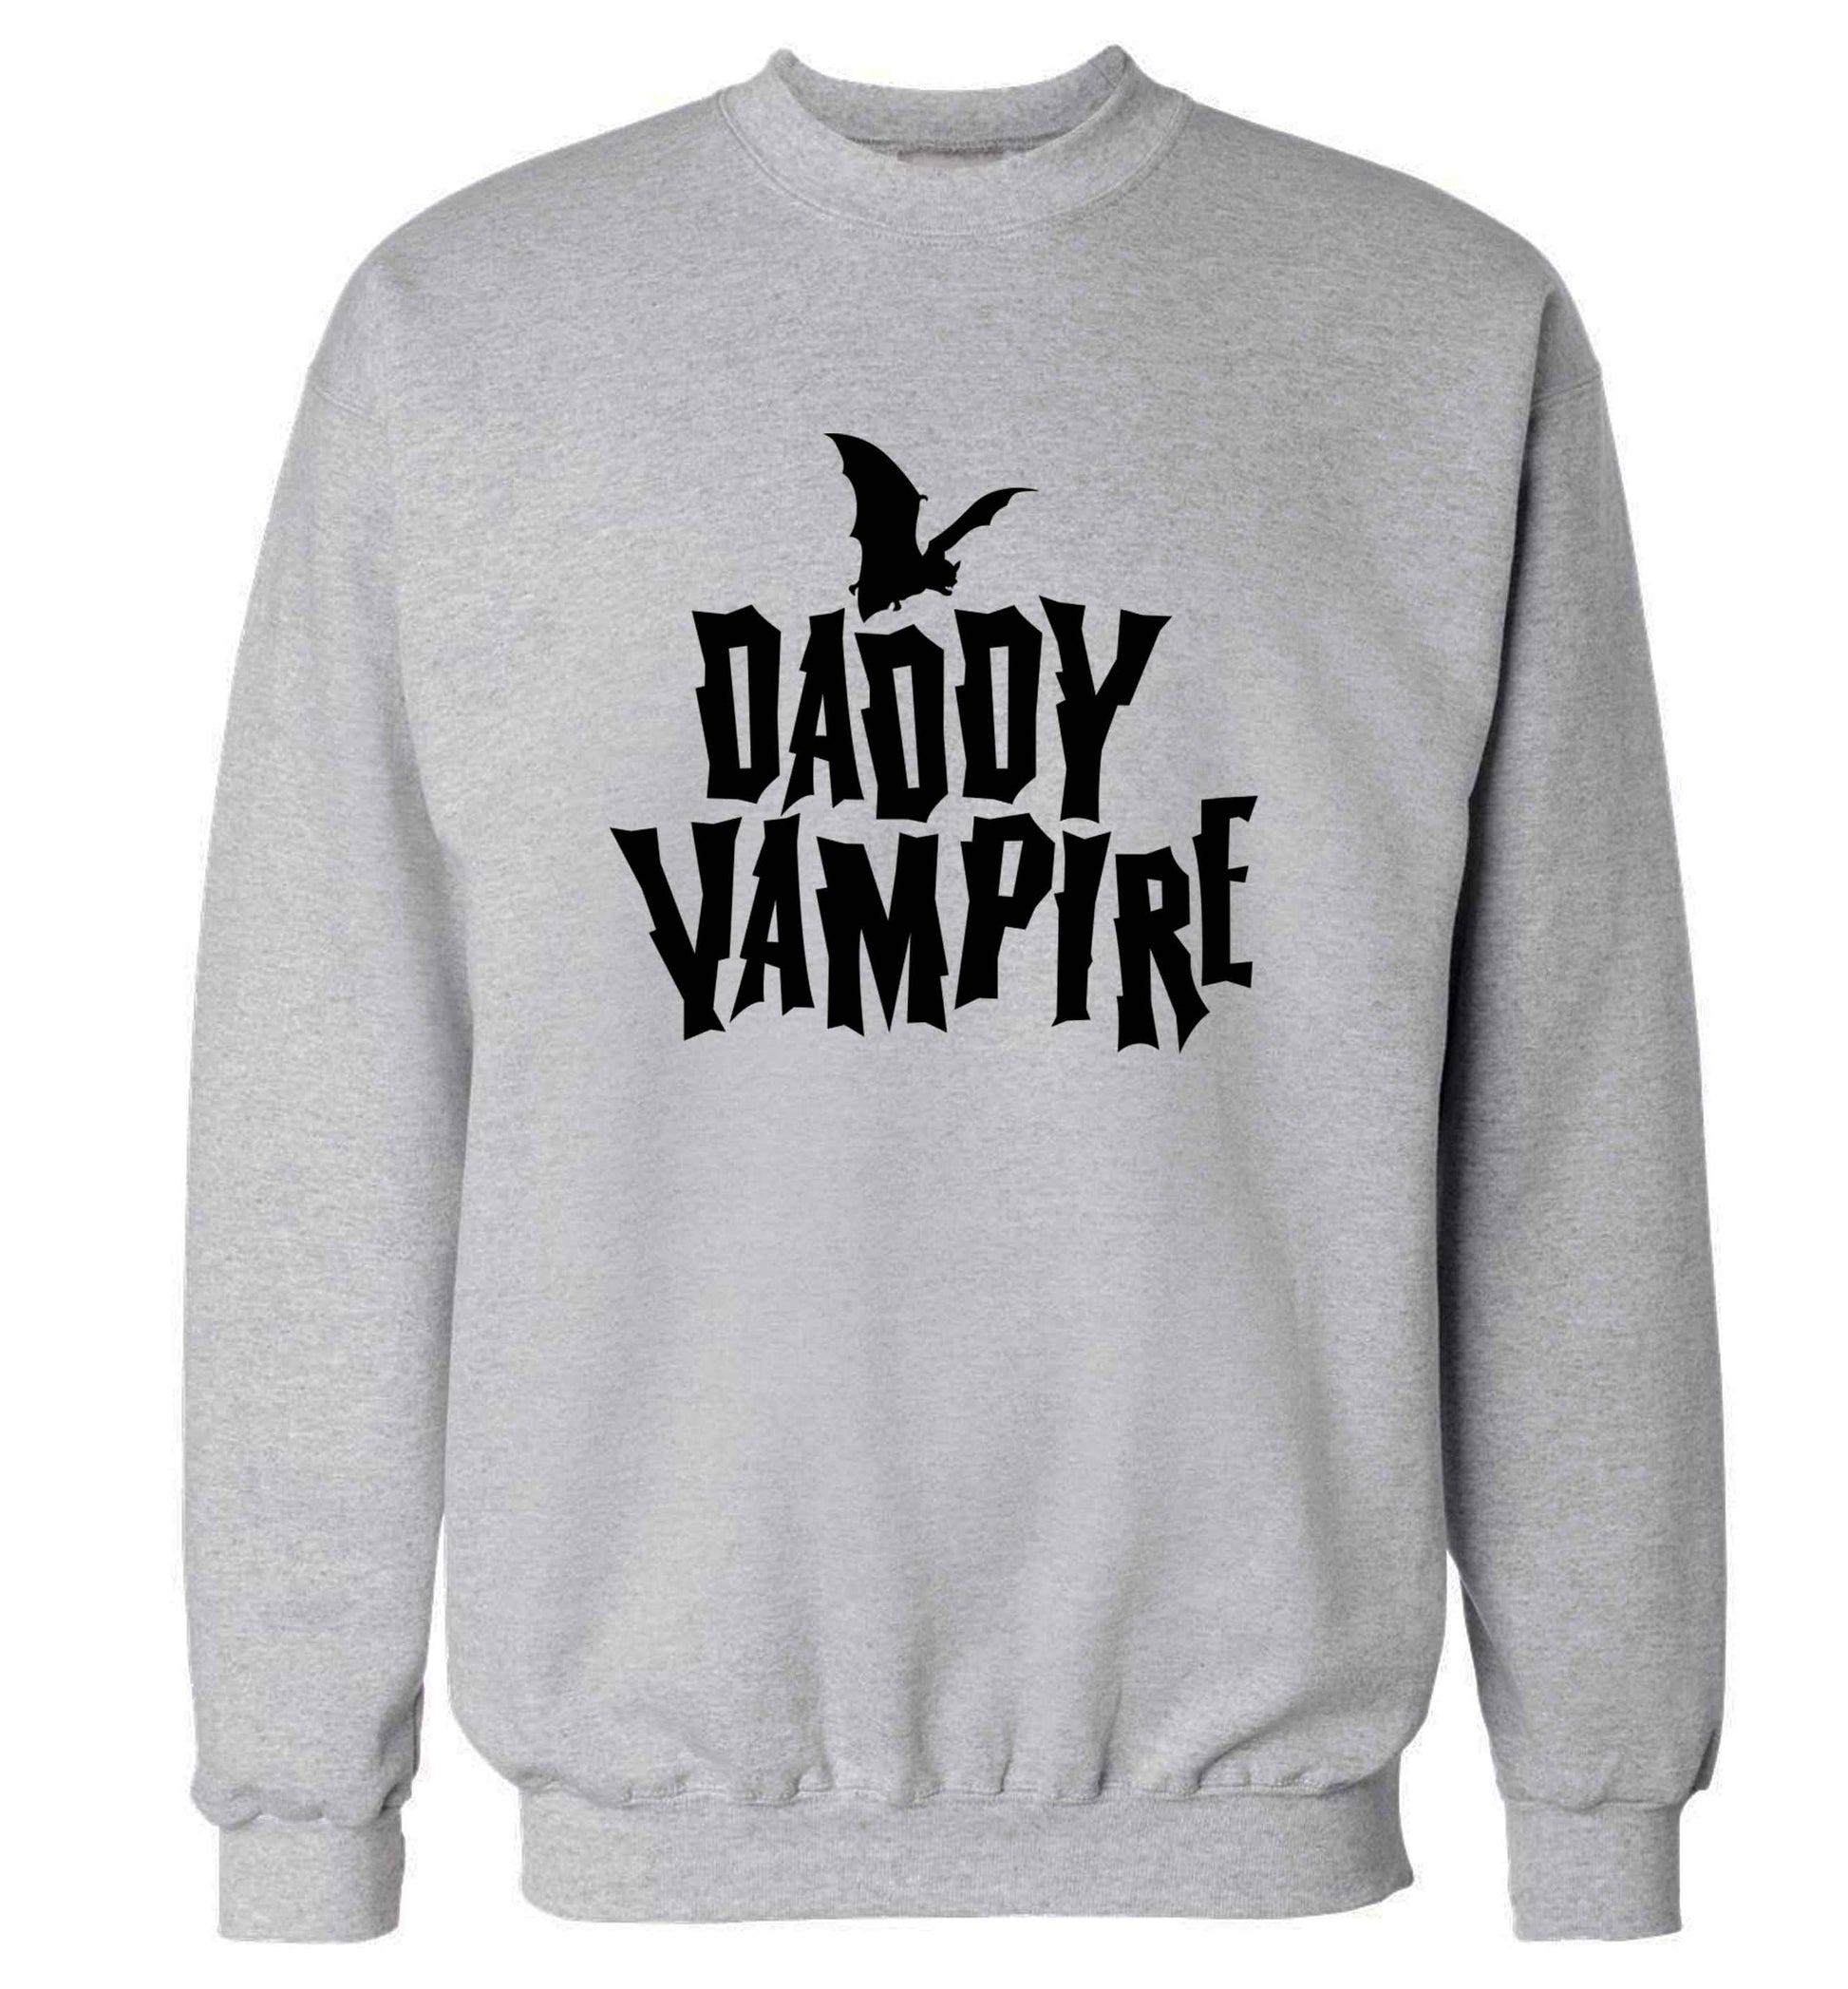 Daddy vampire adult's unisex grey sweater 2XL